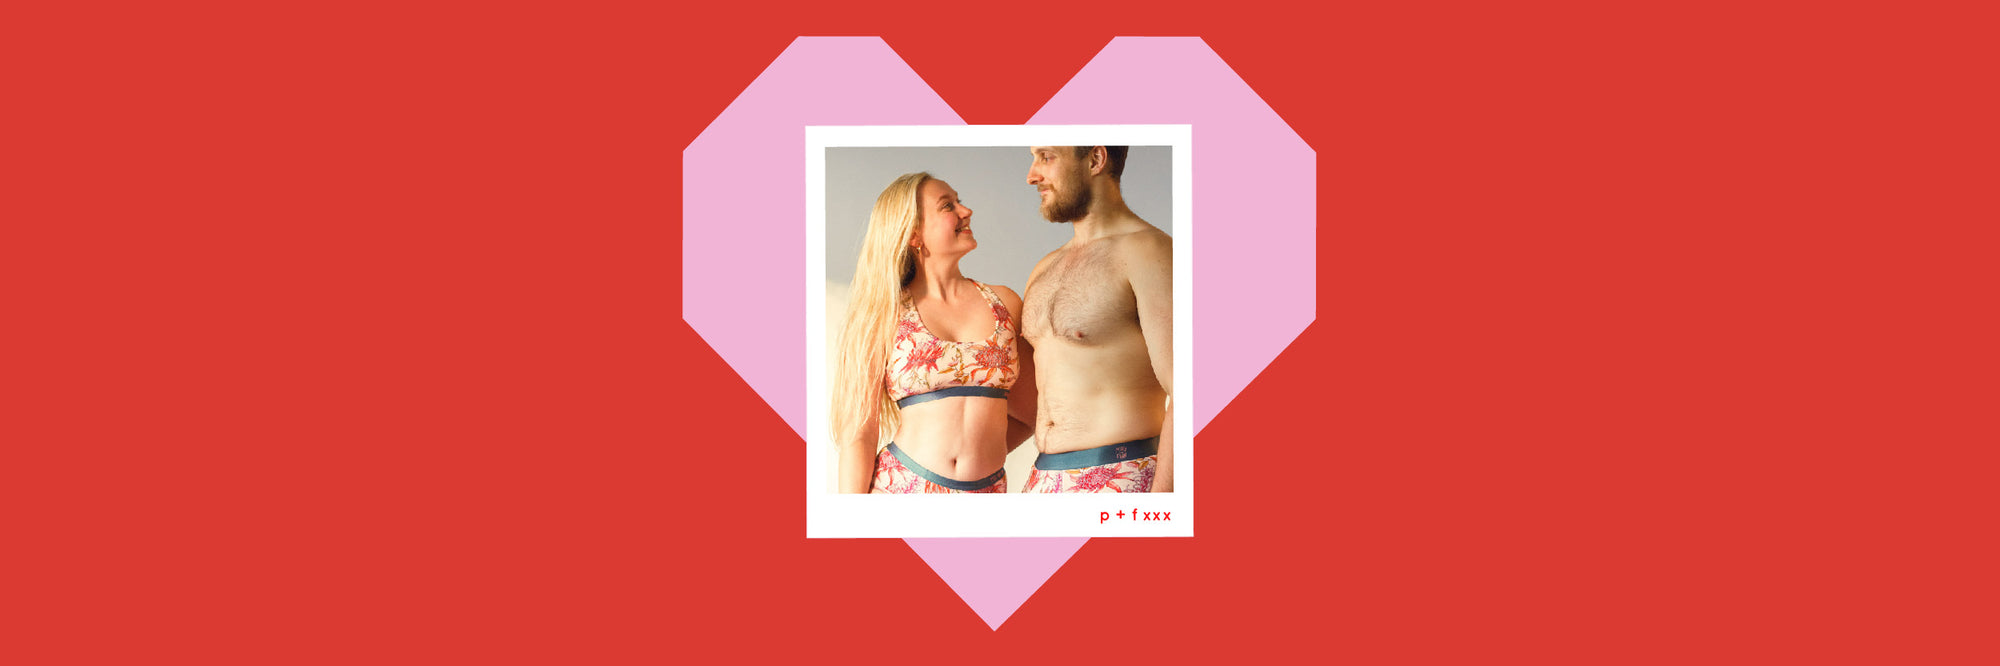 Valentine 24 – Peggy and Finn